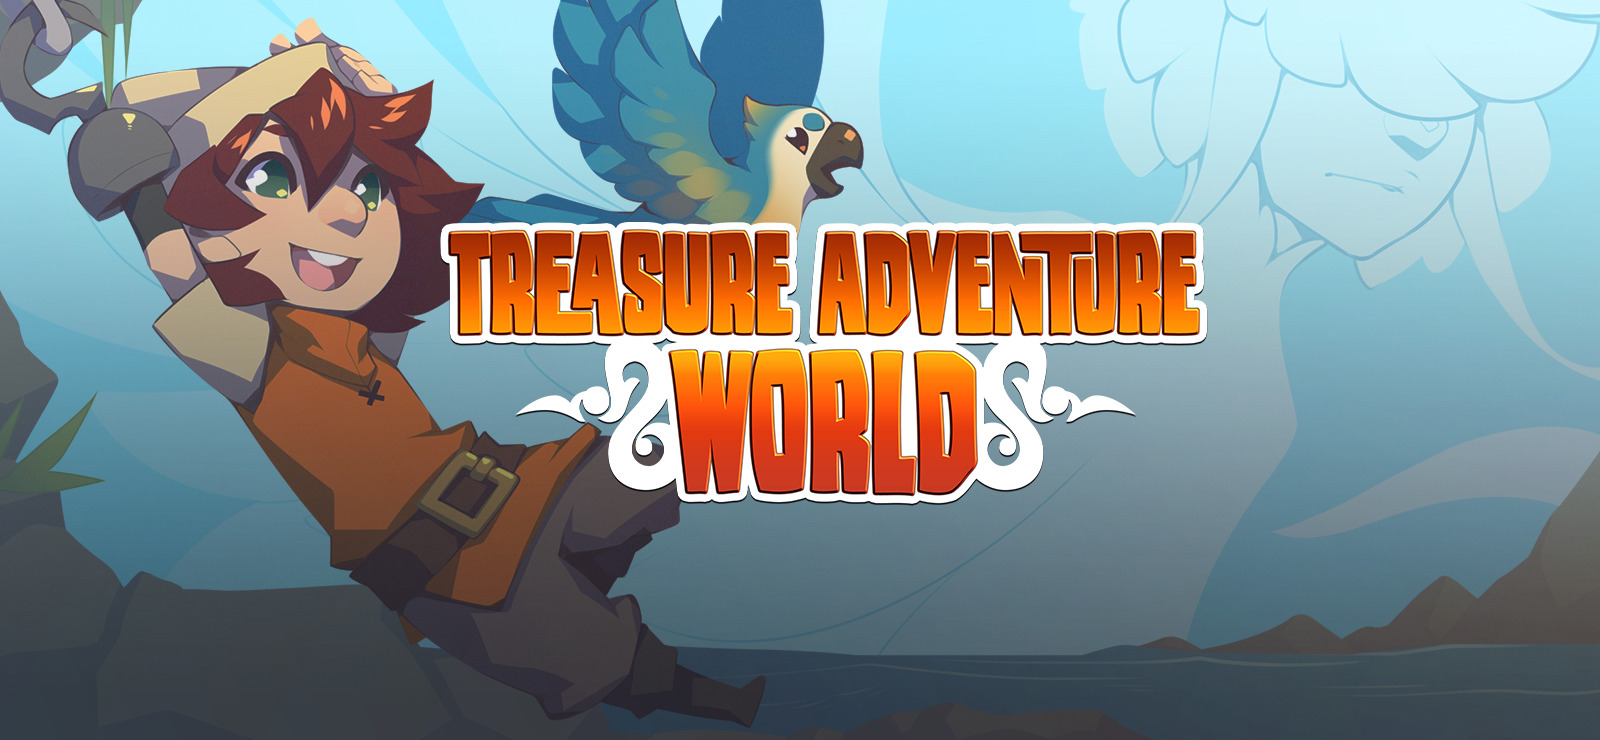 krog Cordelia hvor ofte Treasure Adventure World on GOG.com